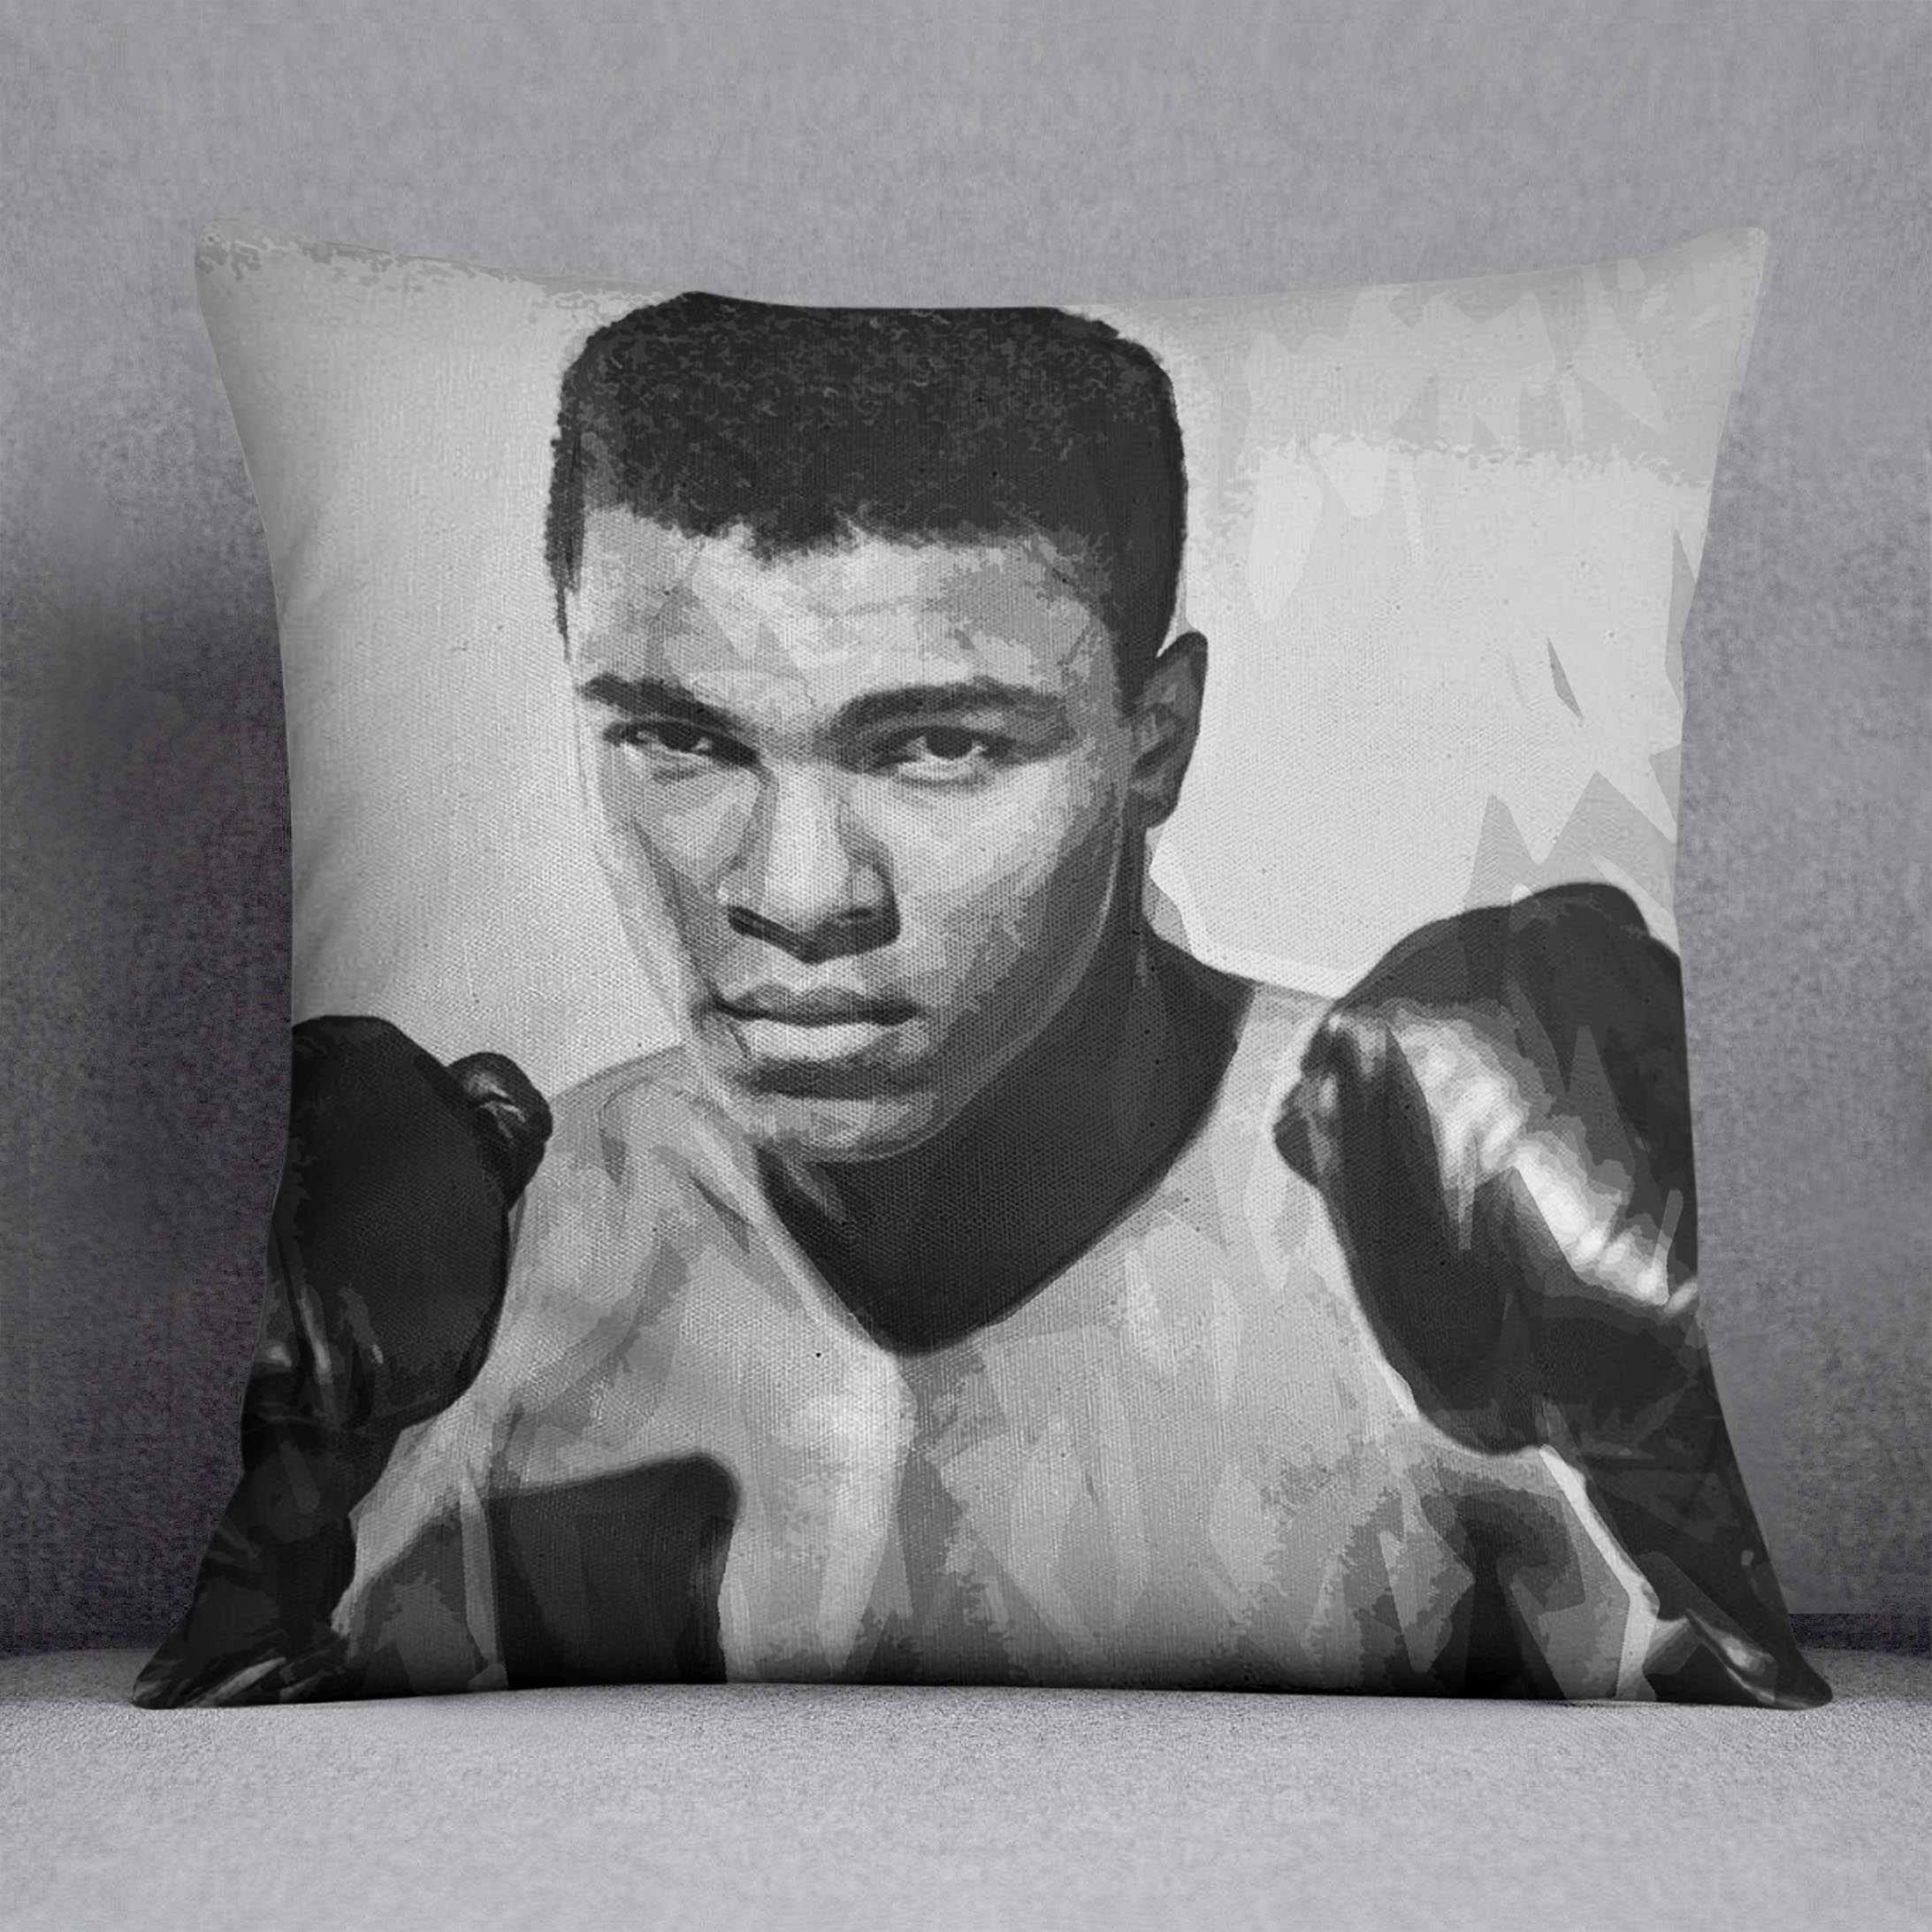 Muhammad Ali Cushion